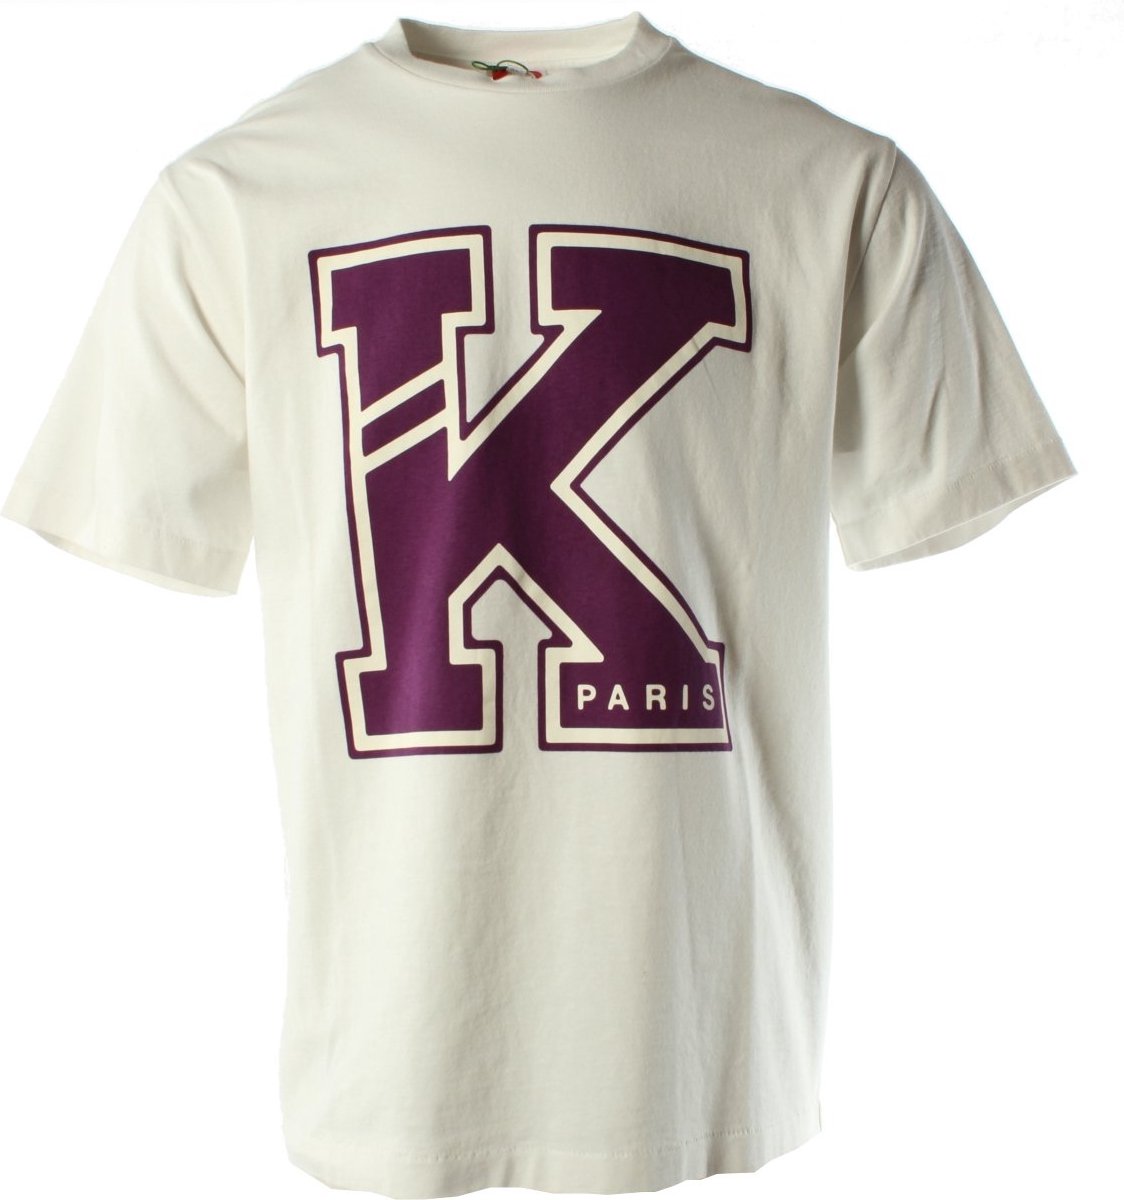 Kenzo T-shirt maat M